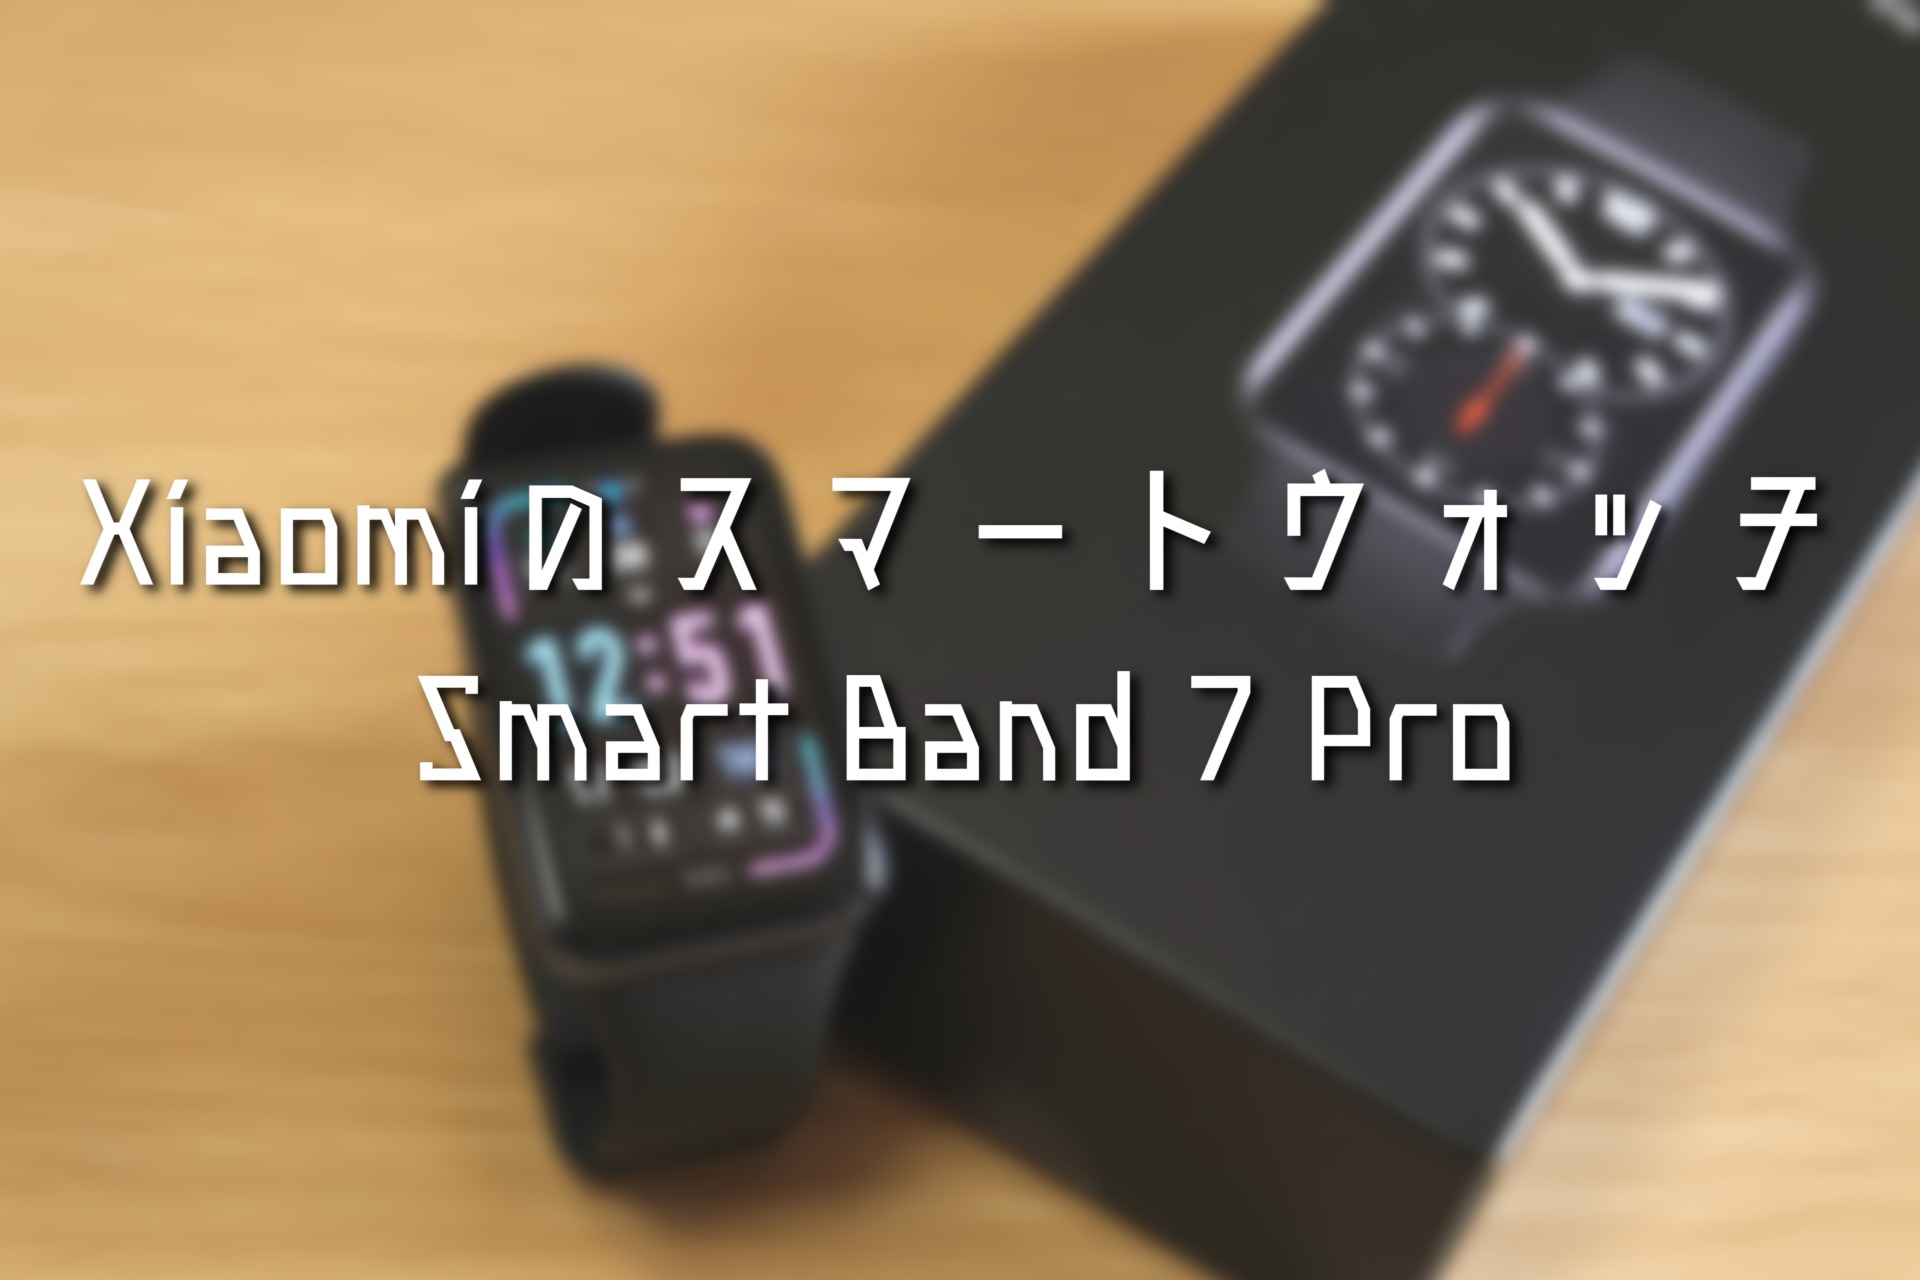 Xiaomi Smart Band 7 Proレビュー